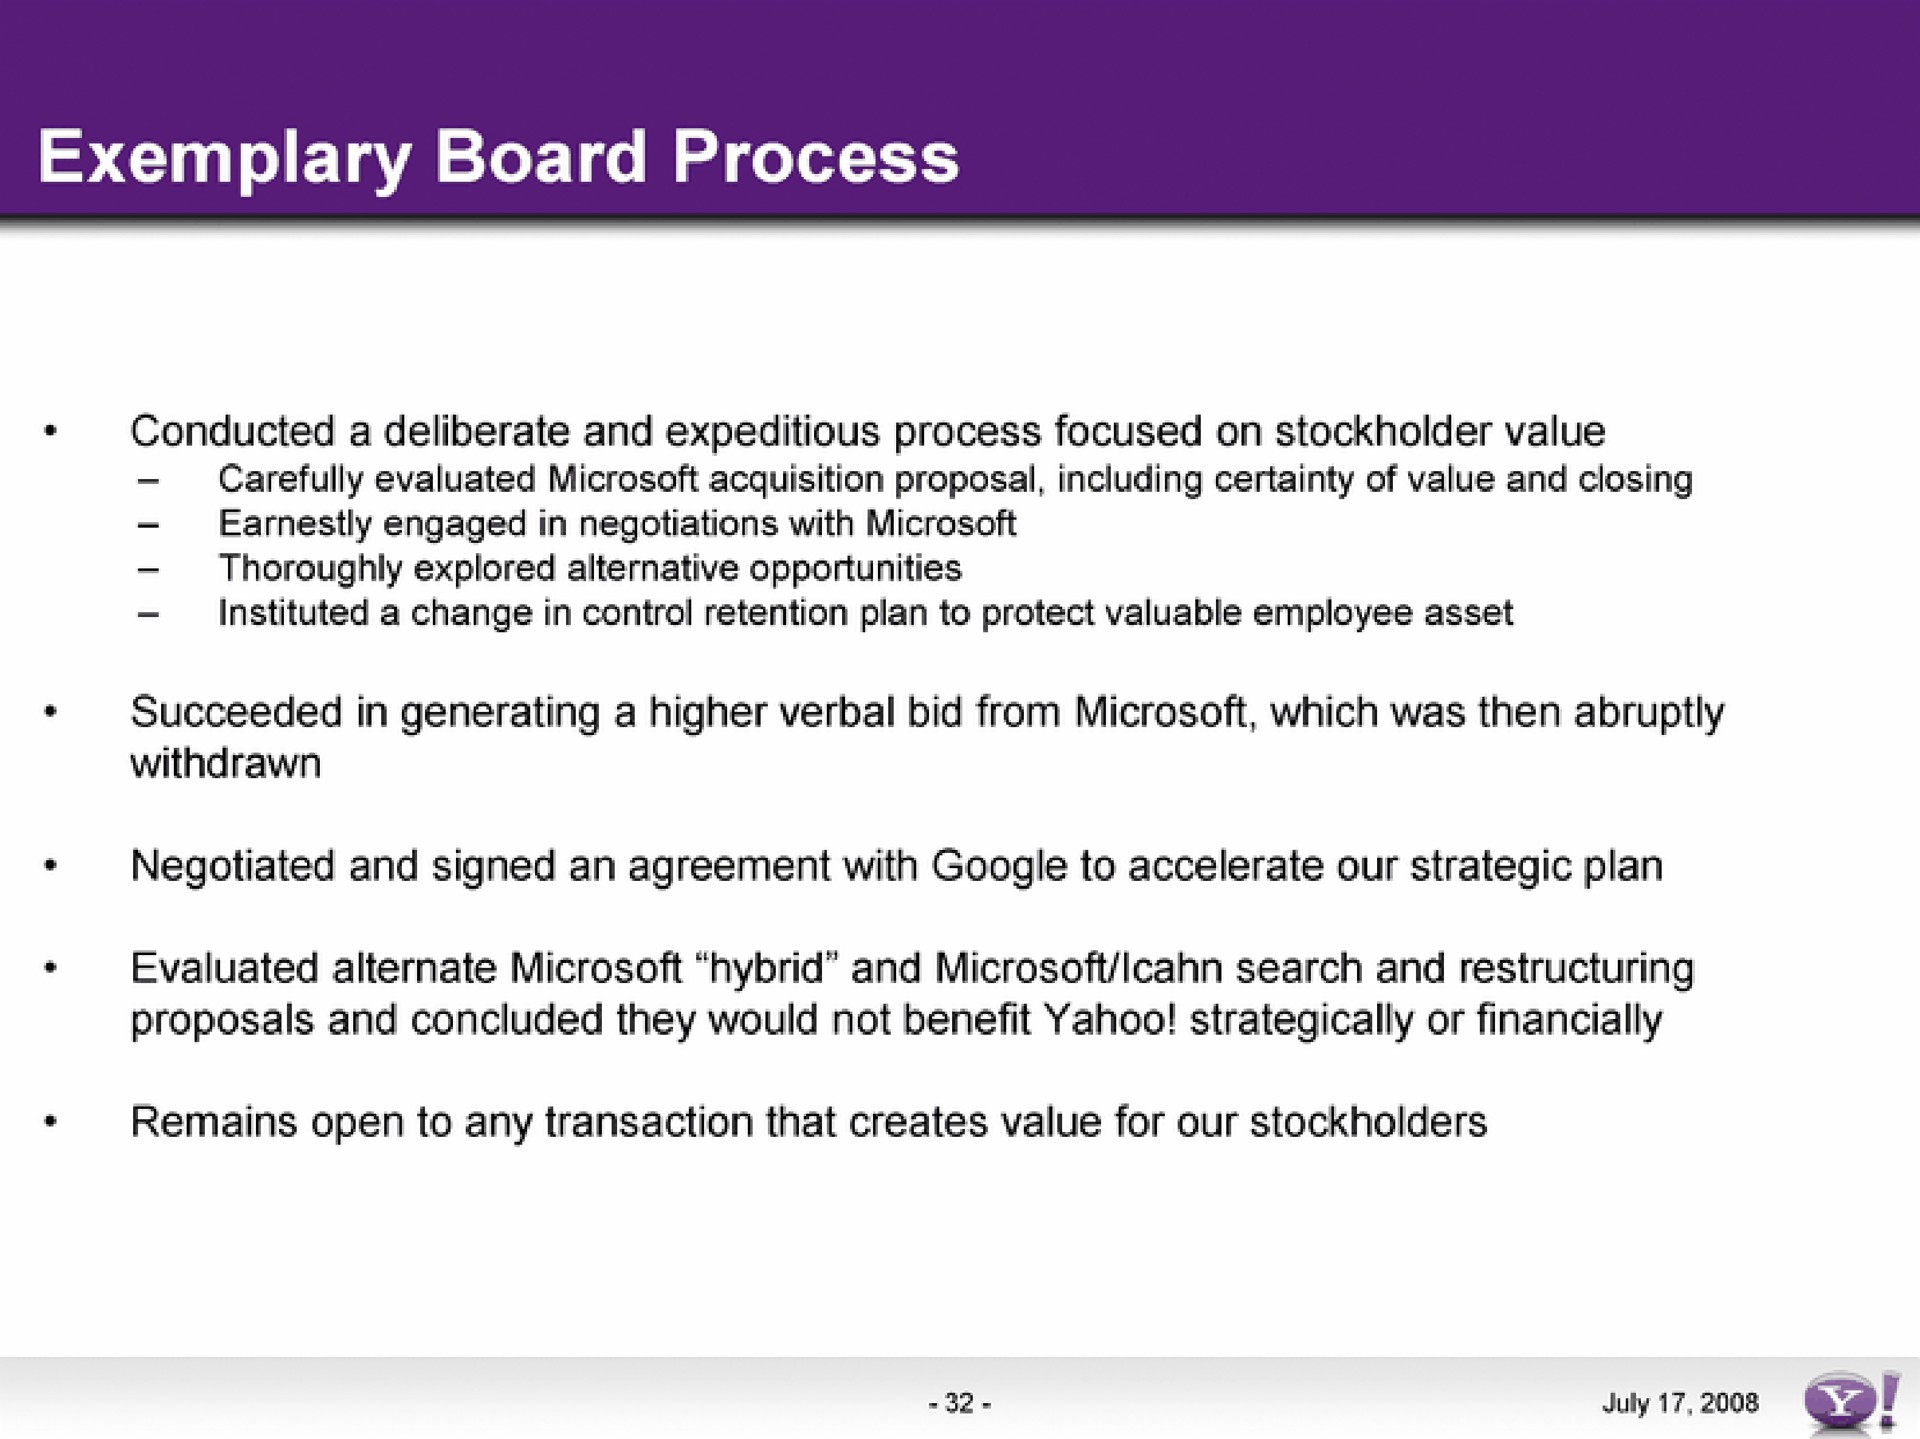 exemplary board process | Yahoo